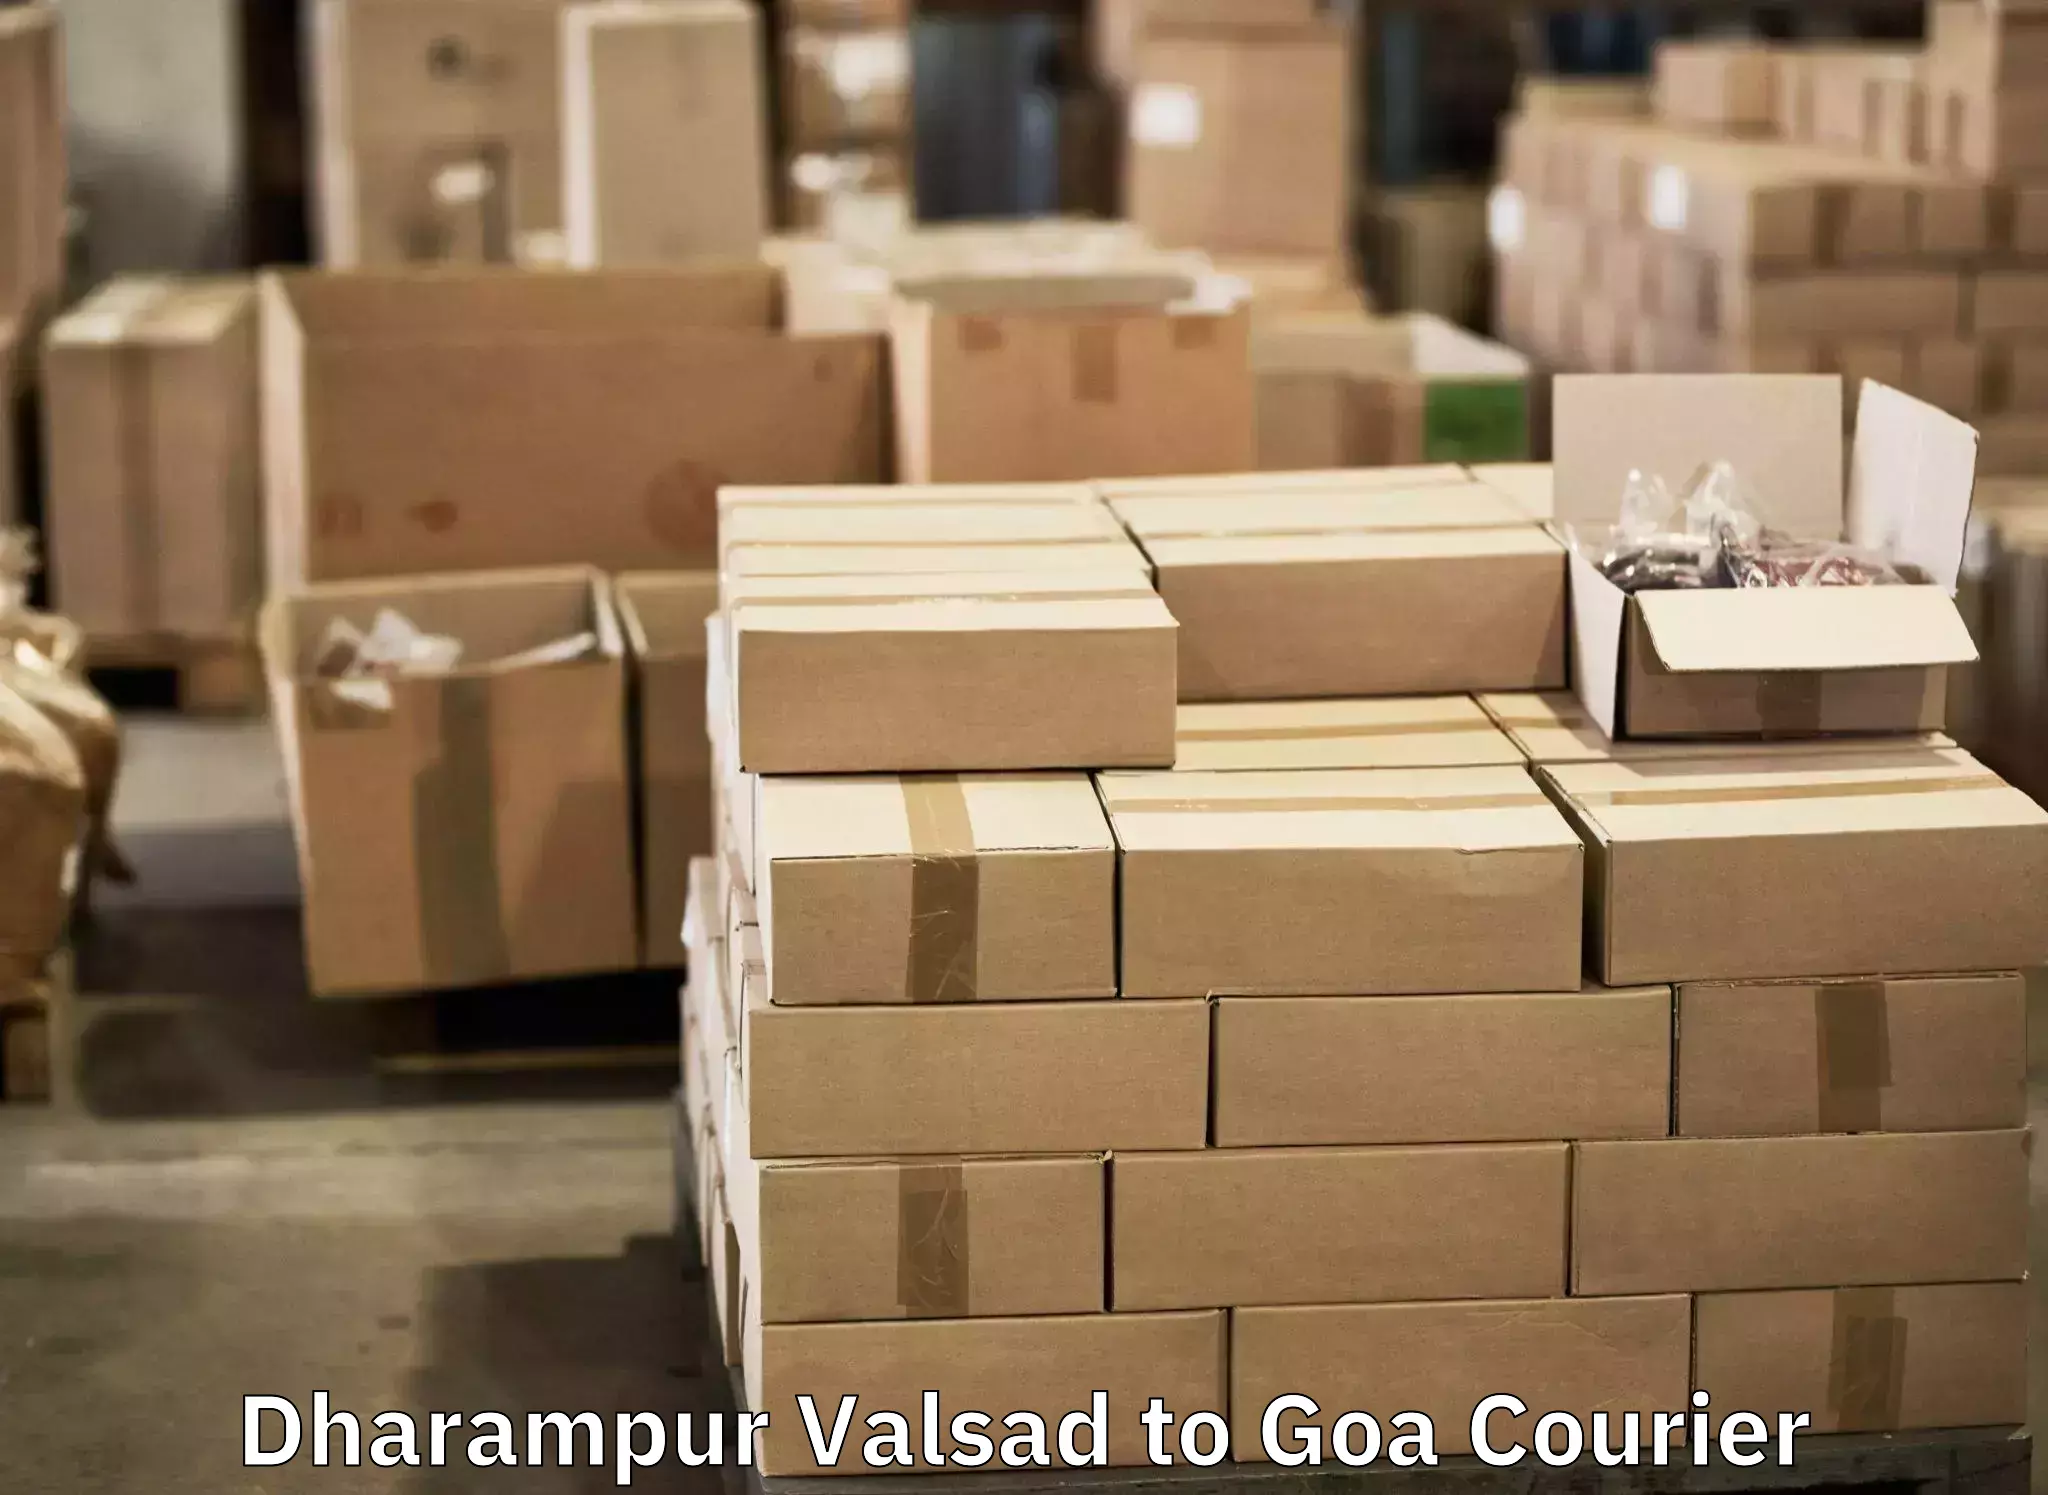 Same day luggage service Dharampur Valsad to IIT Goa